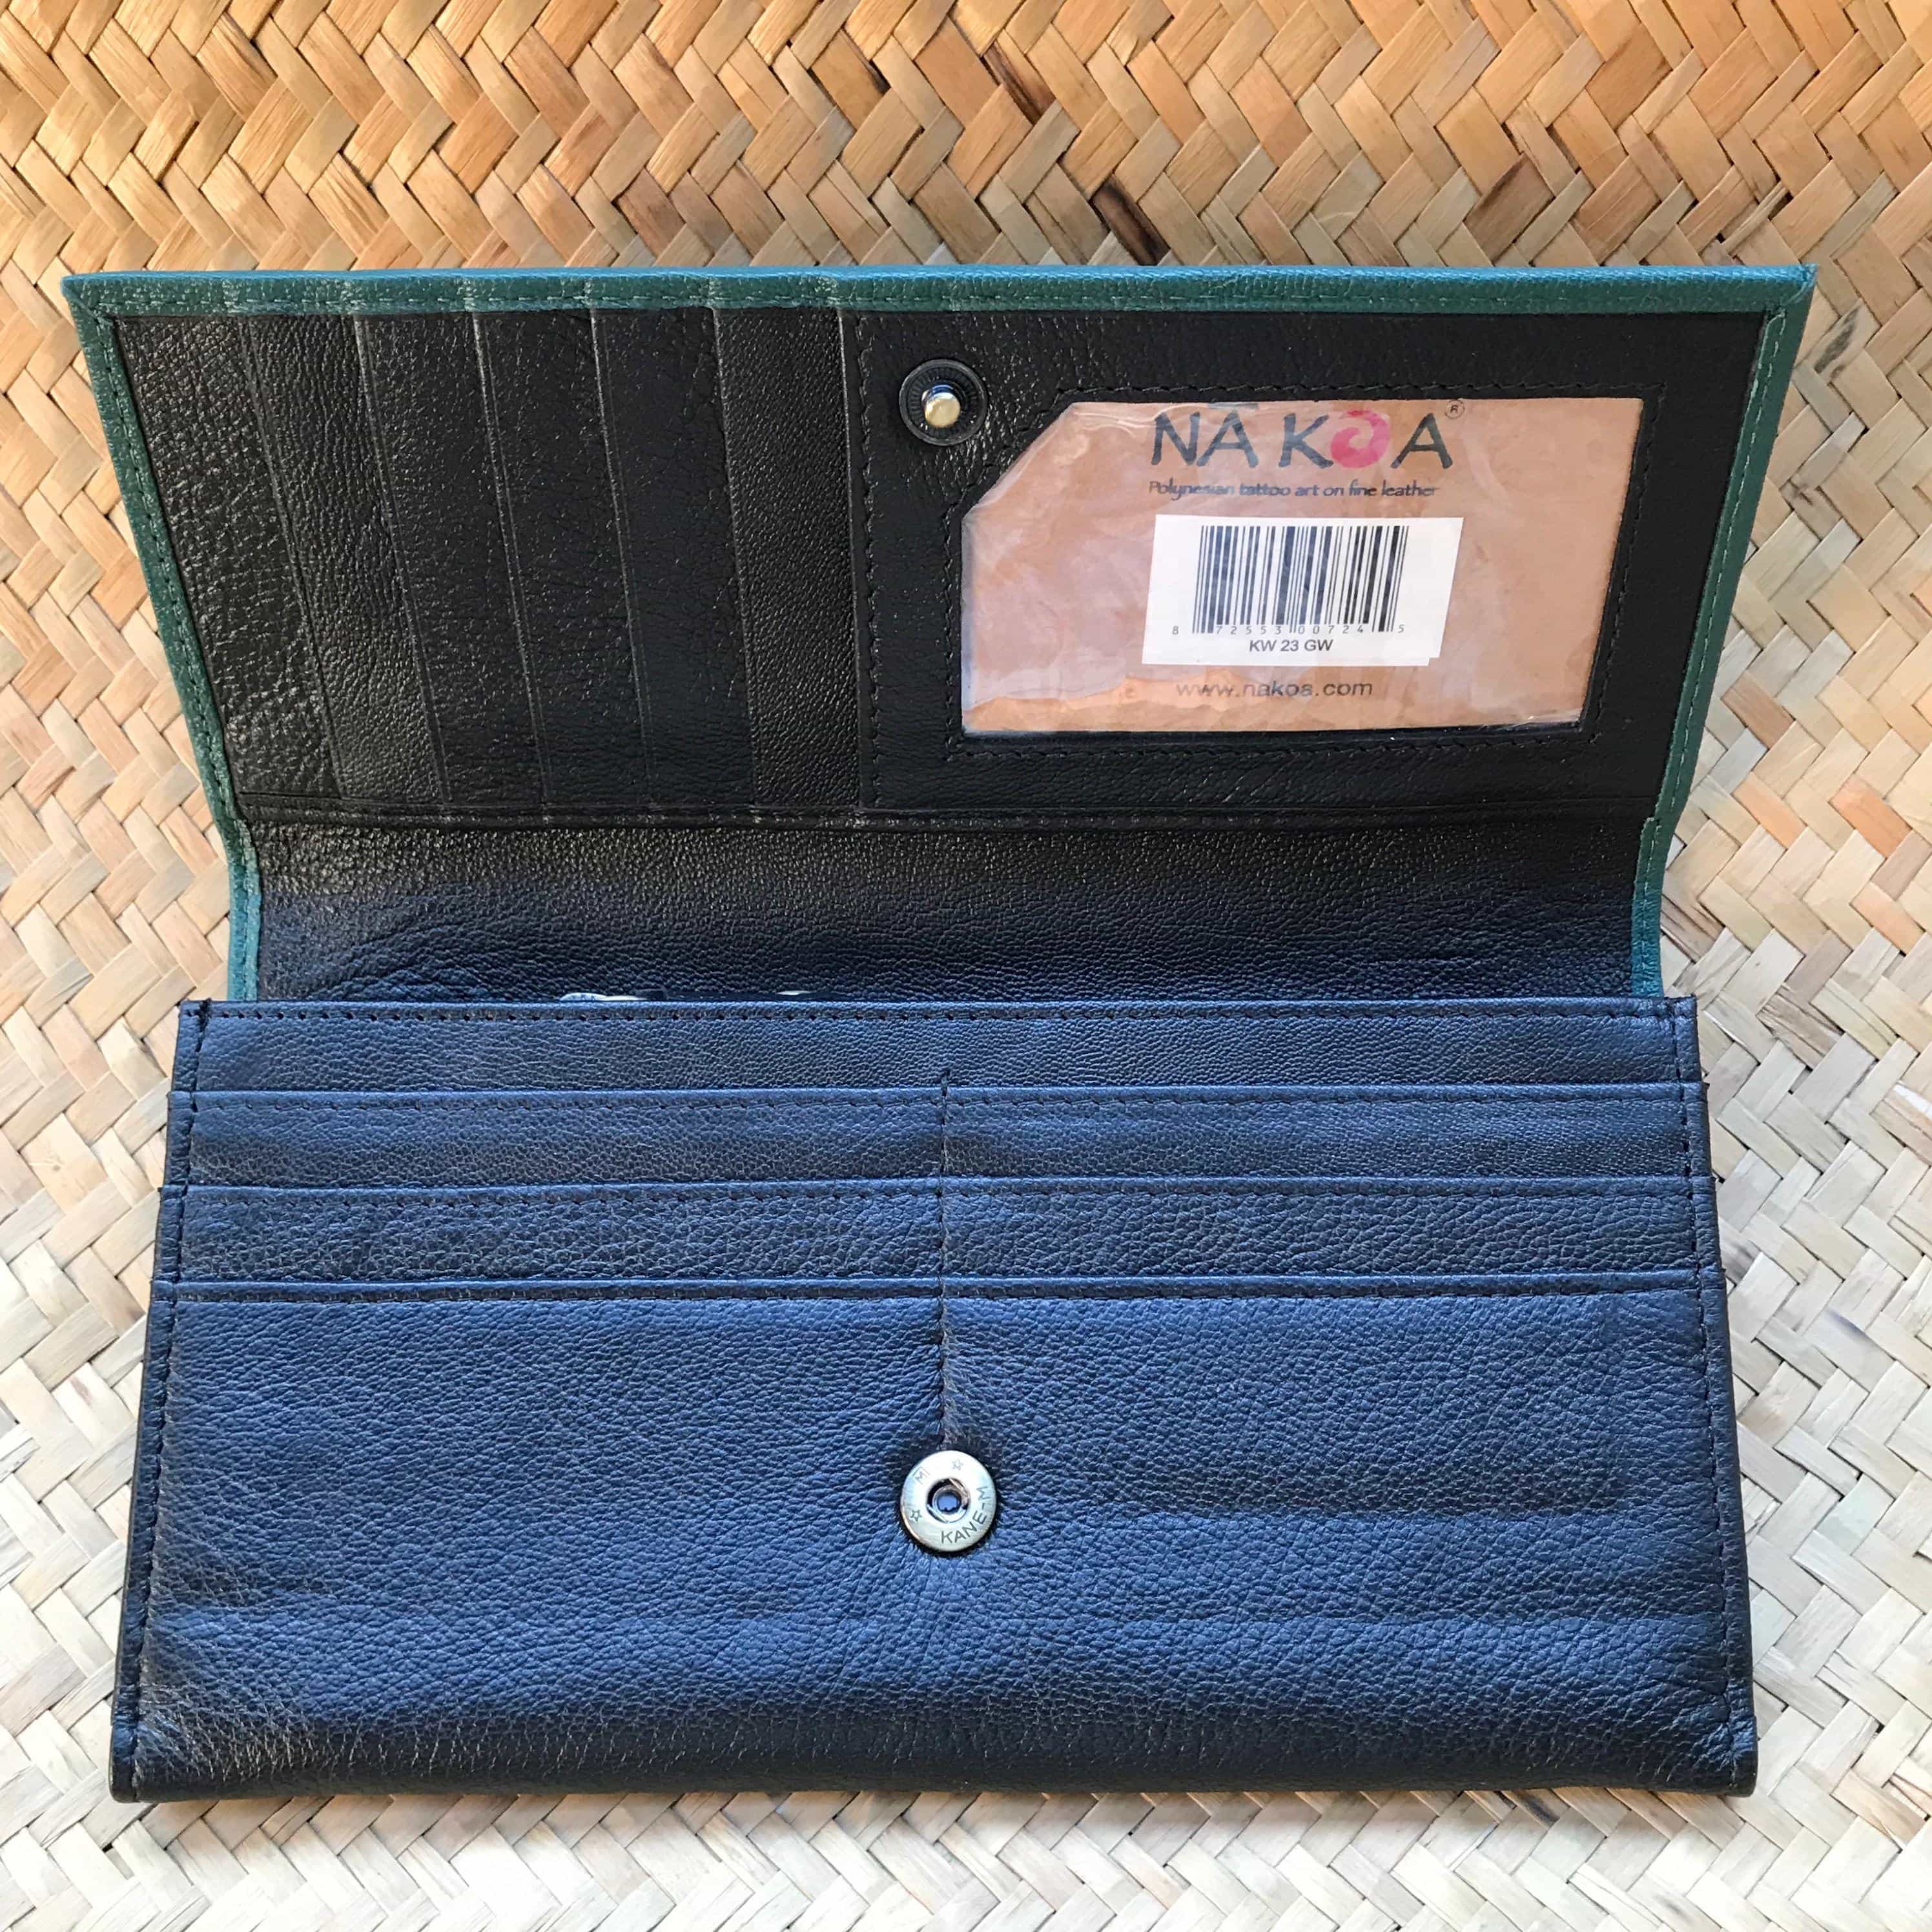 Inside open view of a green leather Hawaiian clutch wallet for women